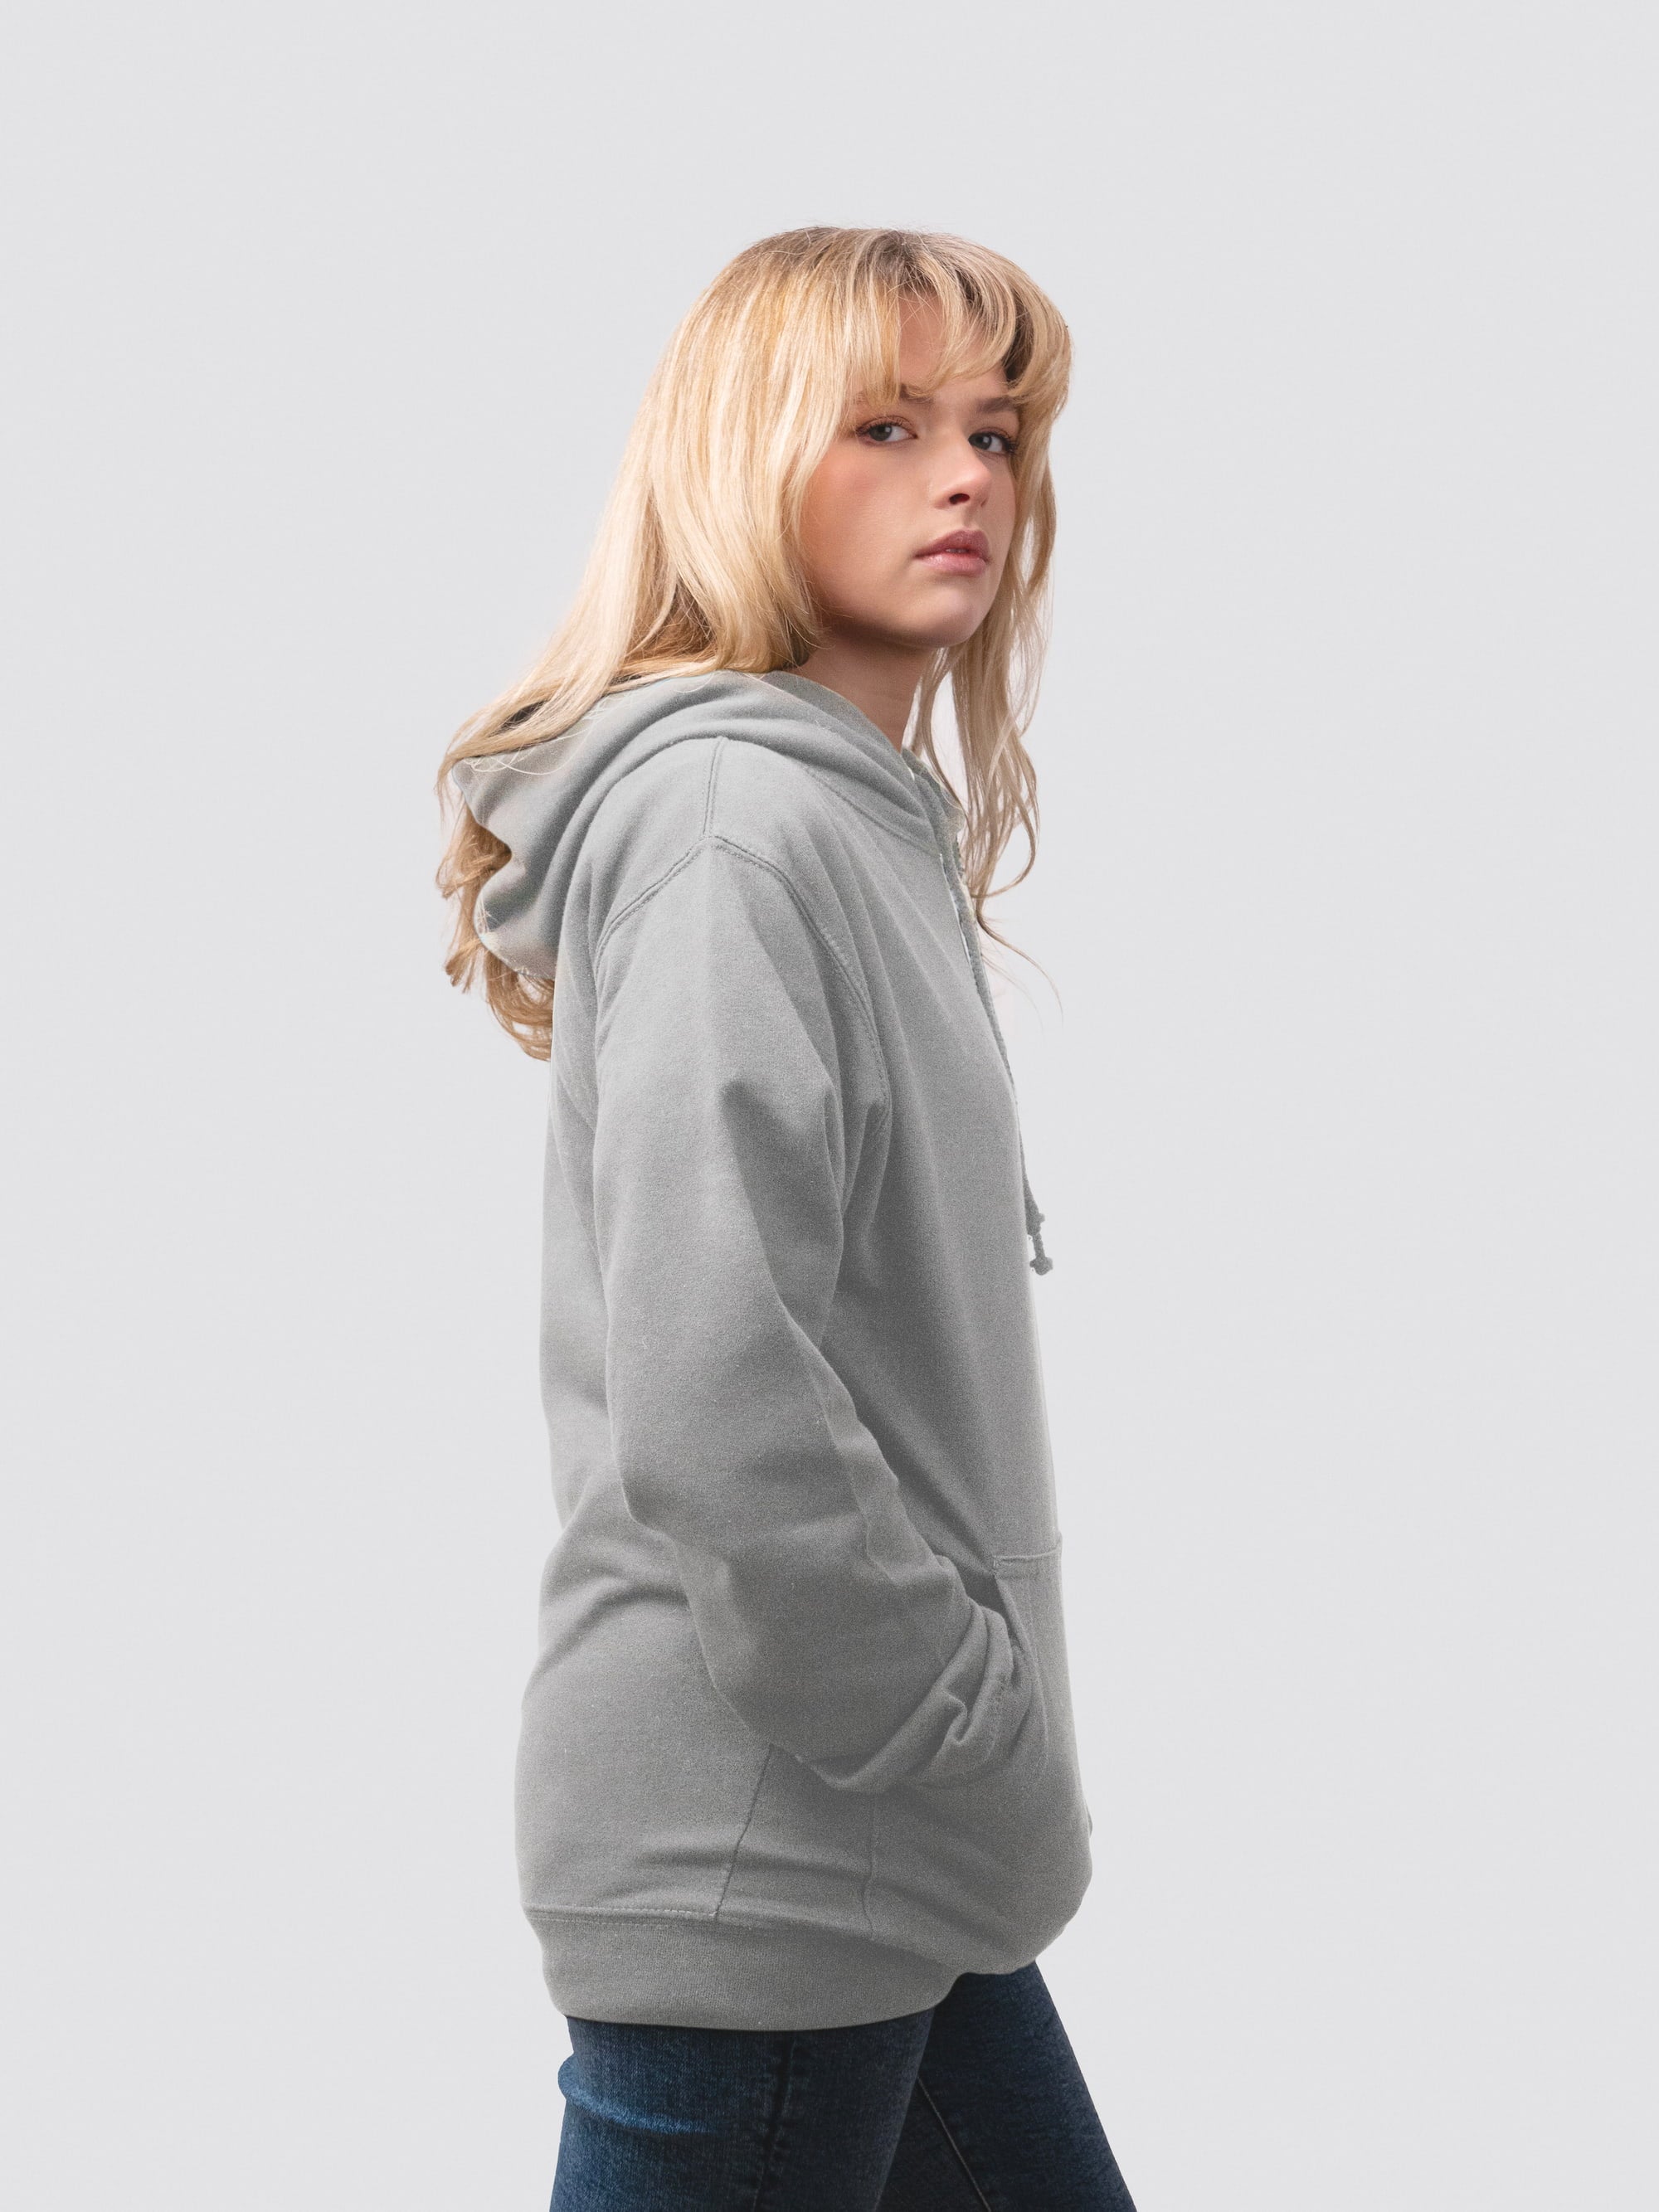 Heather grey hooded-jumper, worn by female undergrad